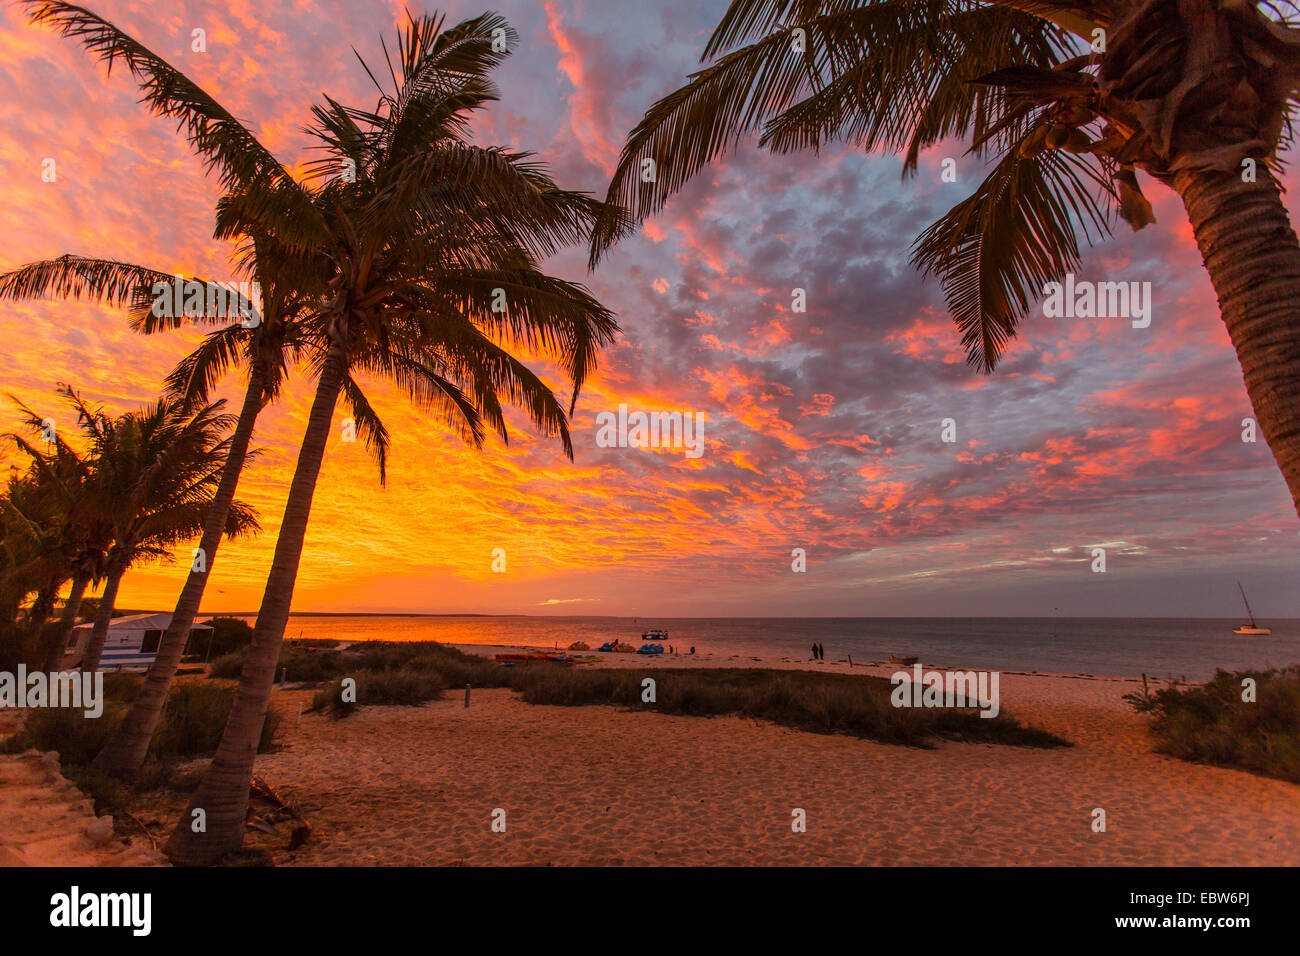 coconut palm (Cocos nucifera), palm beach in sunset, Australia, Western Australia, Monkey Mia Stock Photo